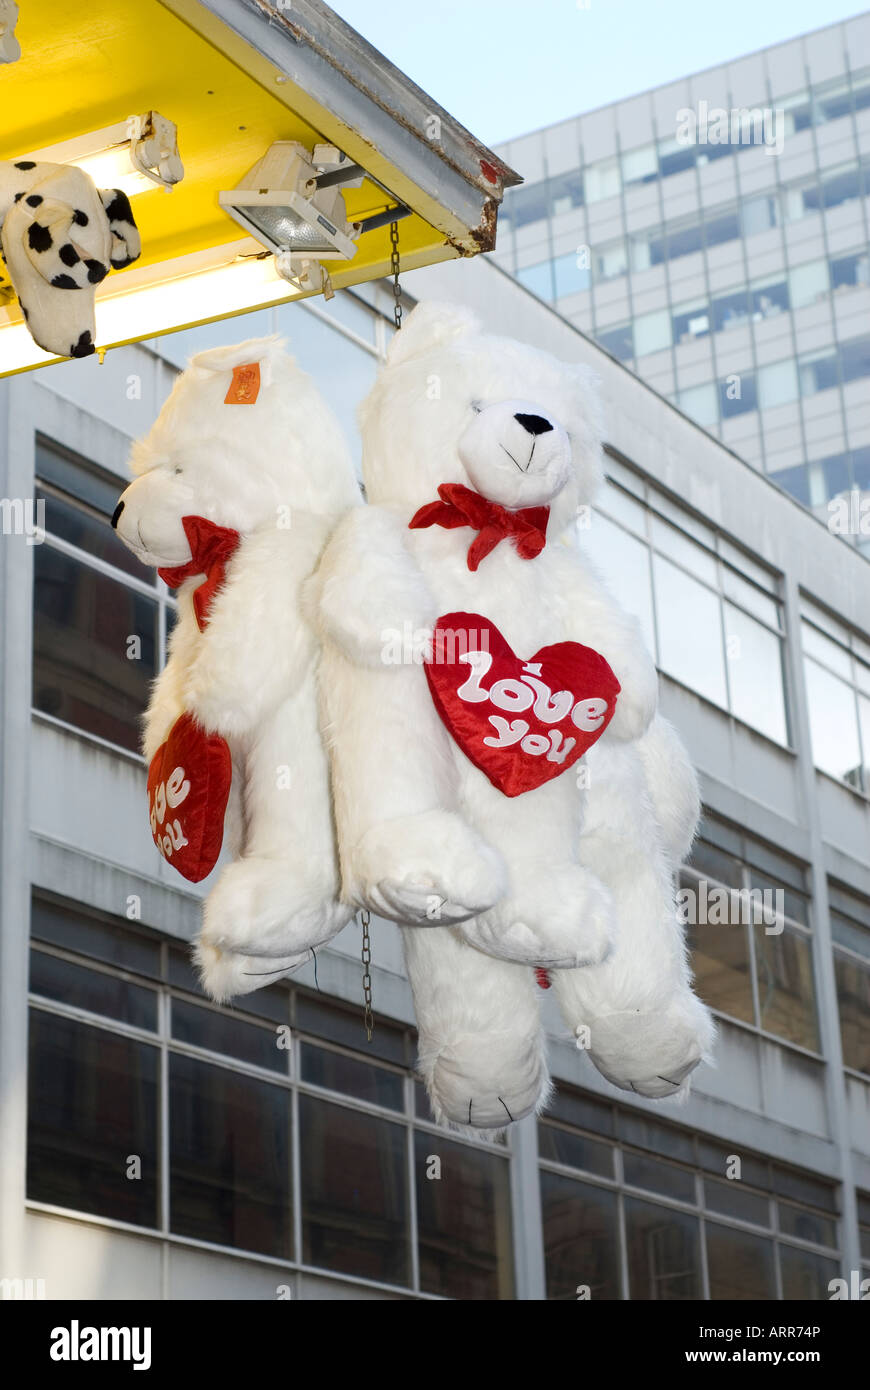 White Stuffed teddy bears with I love you heart Stock Photo